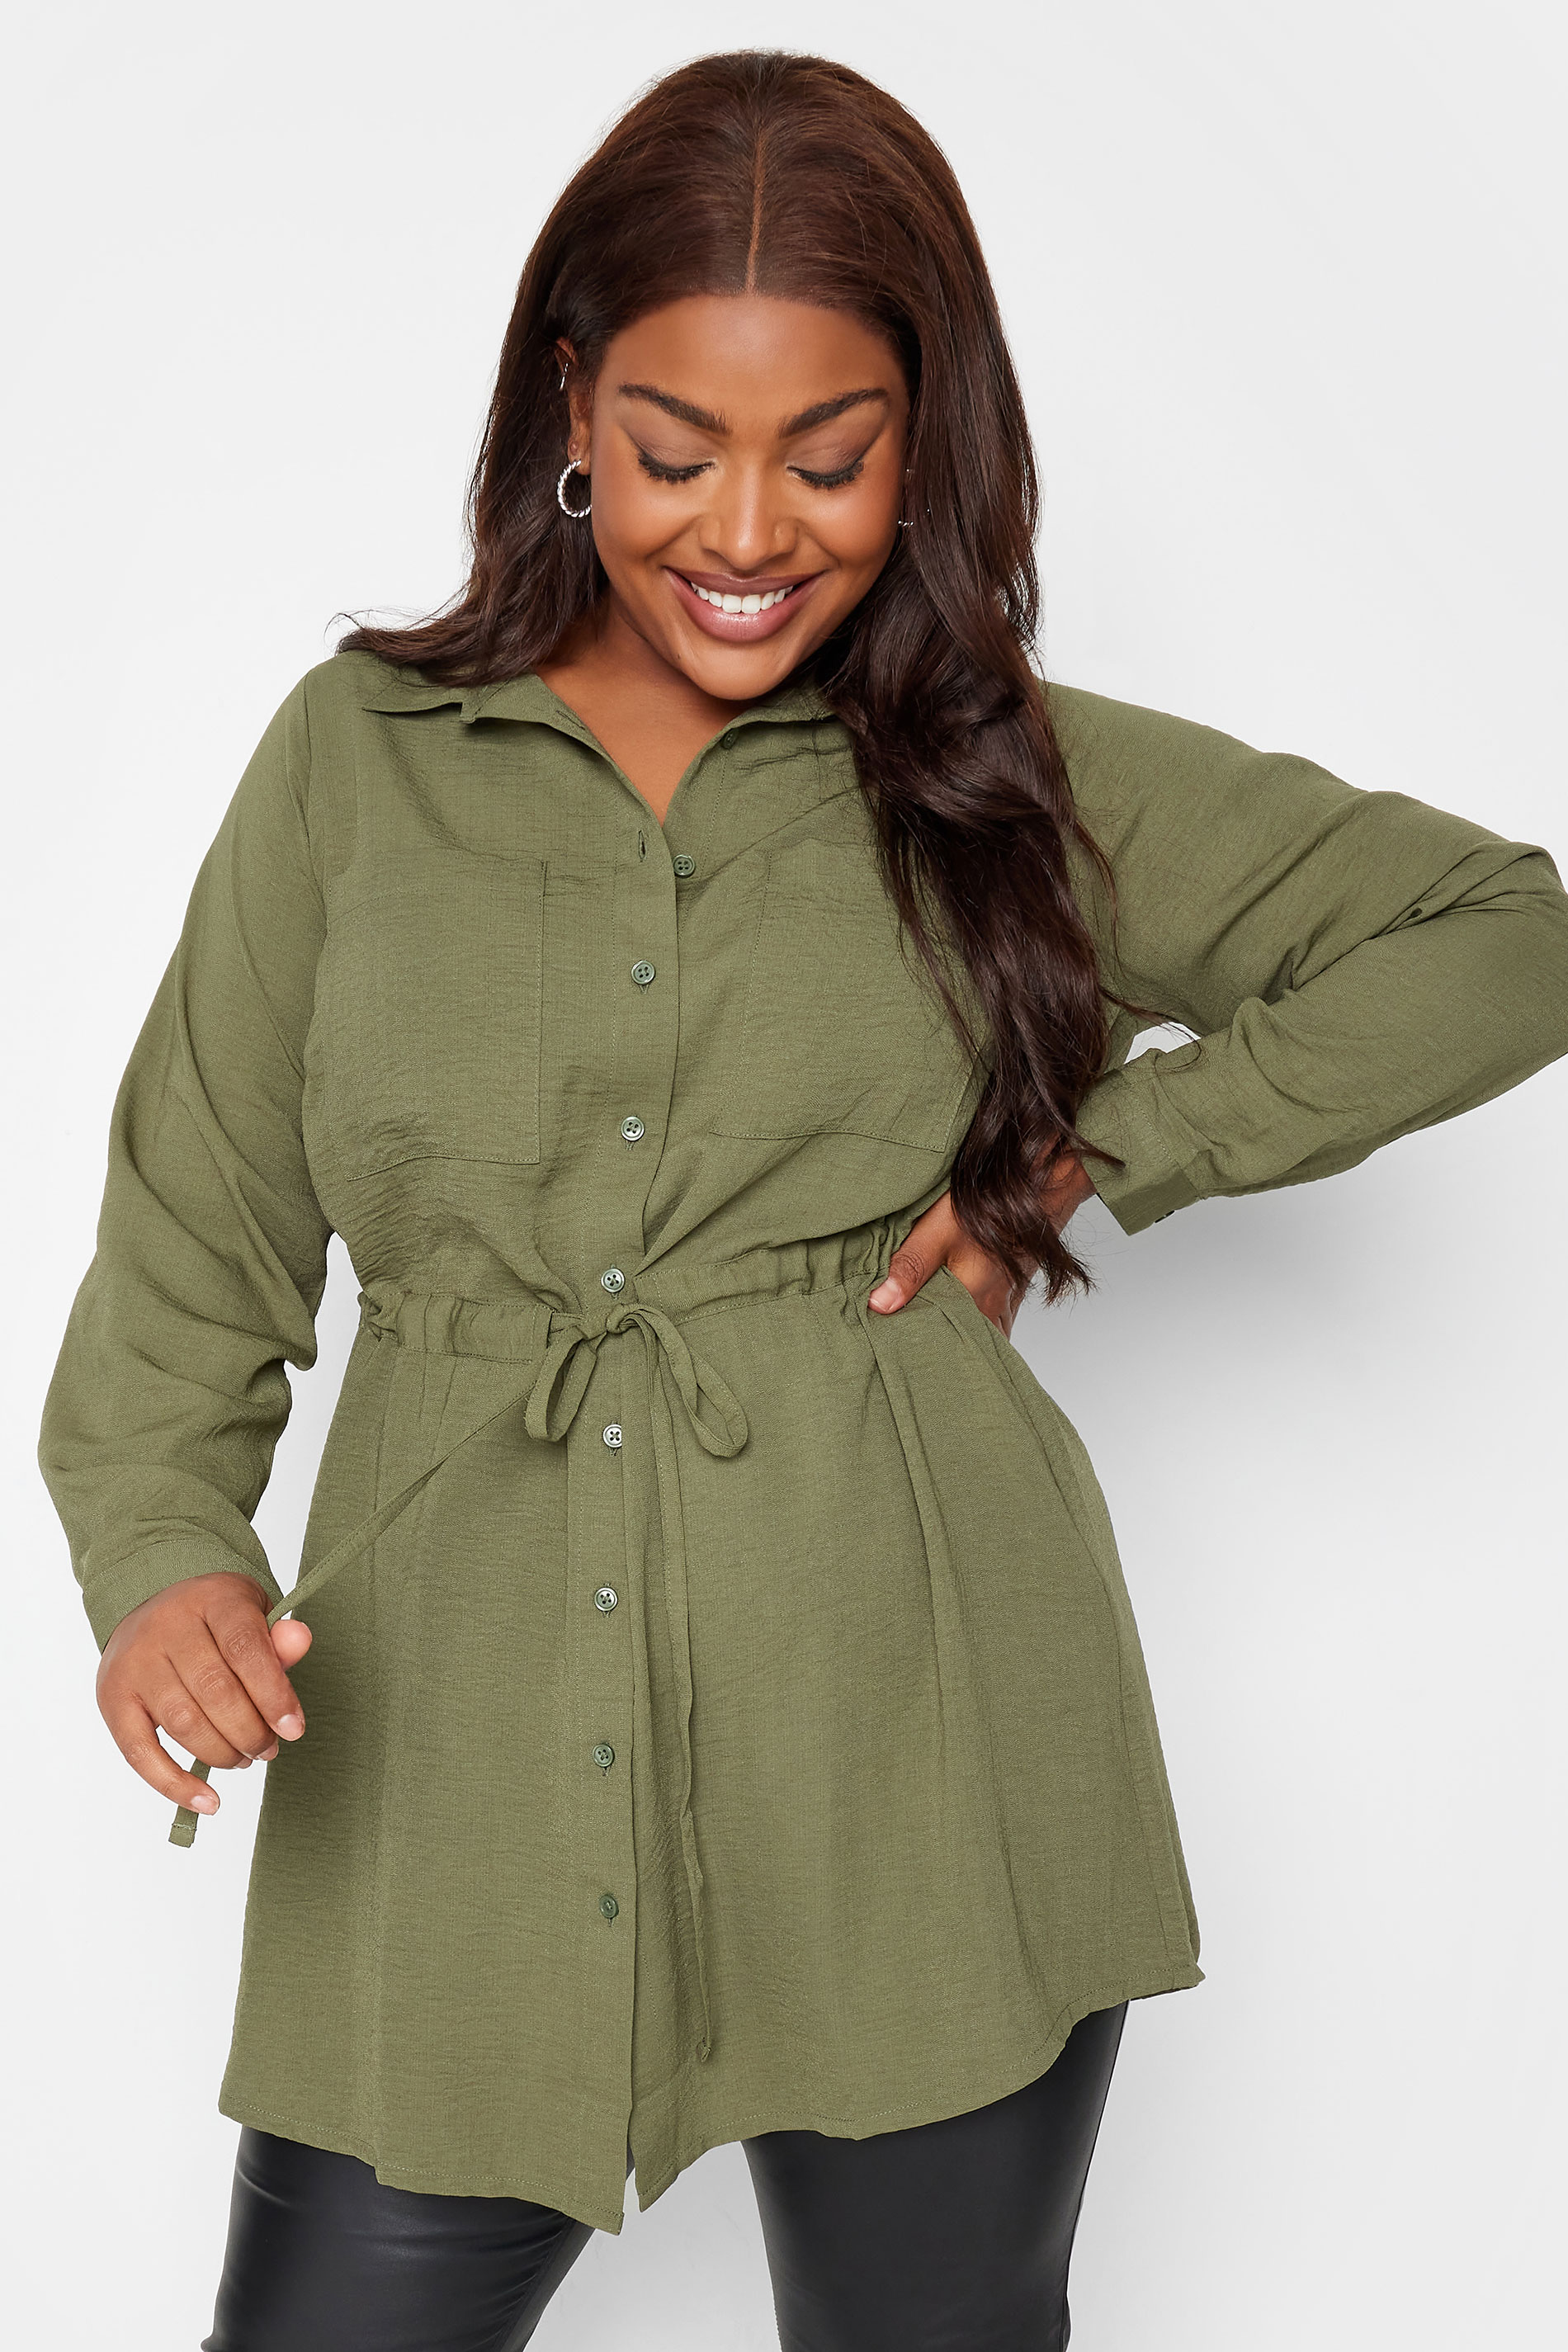 YOURS Curve Plus Size Khaki Green Utility Tunic Shirt | Yours Clothing  2